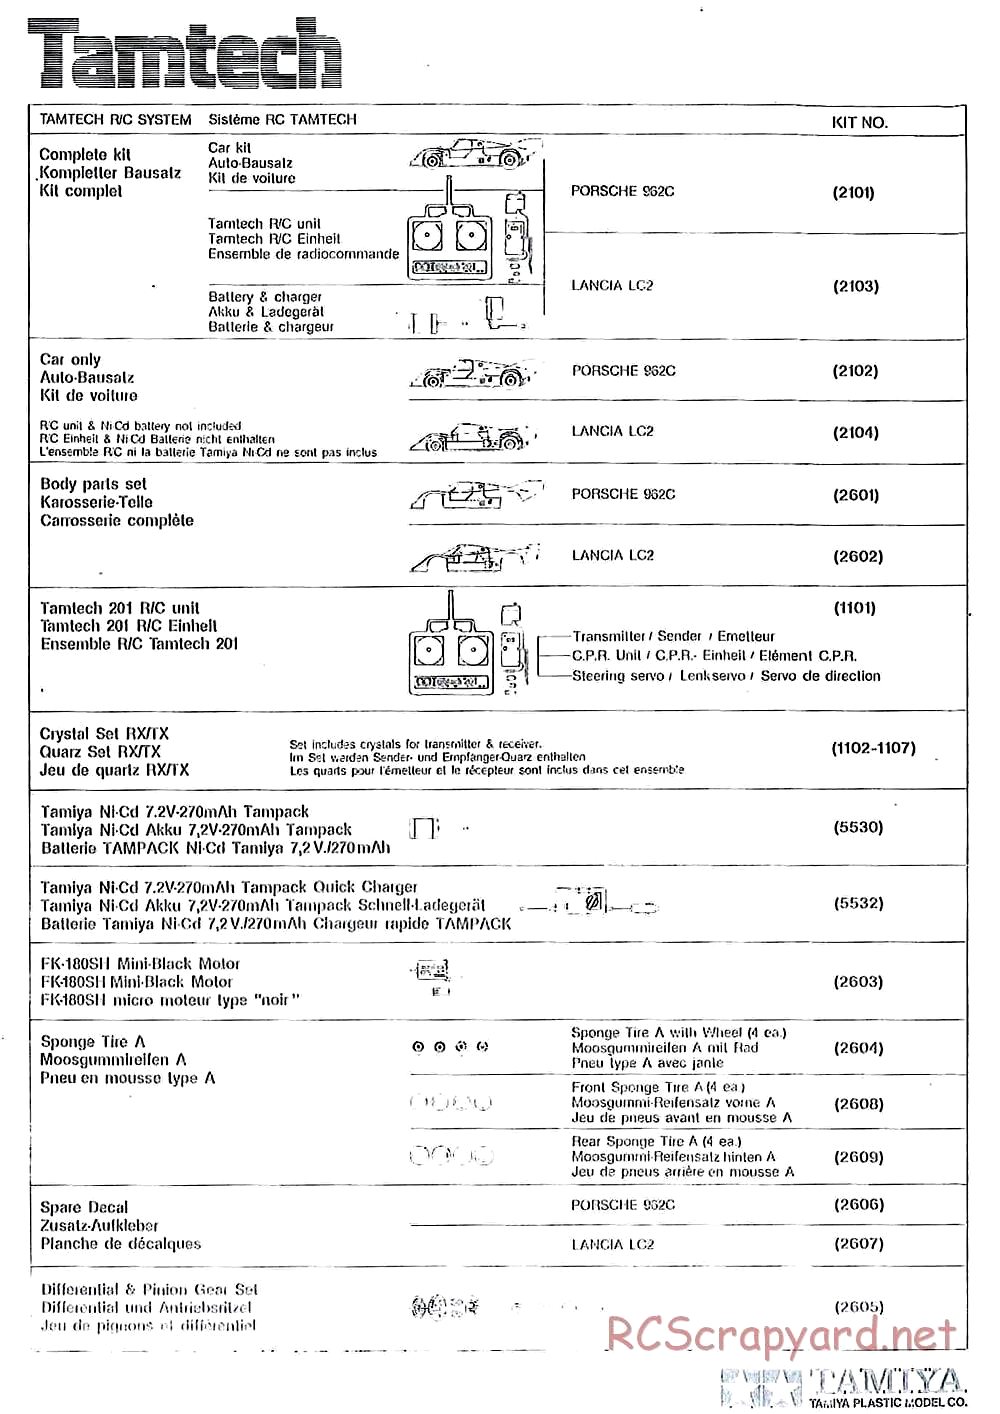 Tamiya - TamTech - F1 Chassis - Manual - Page 17